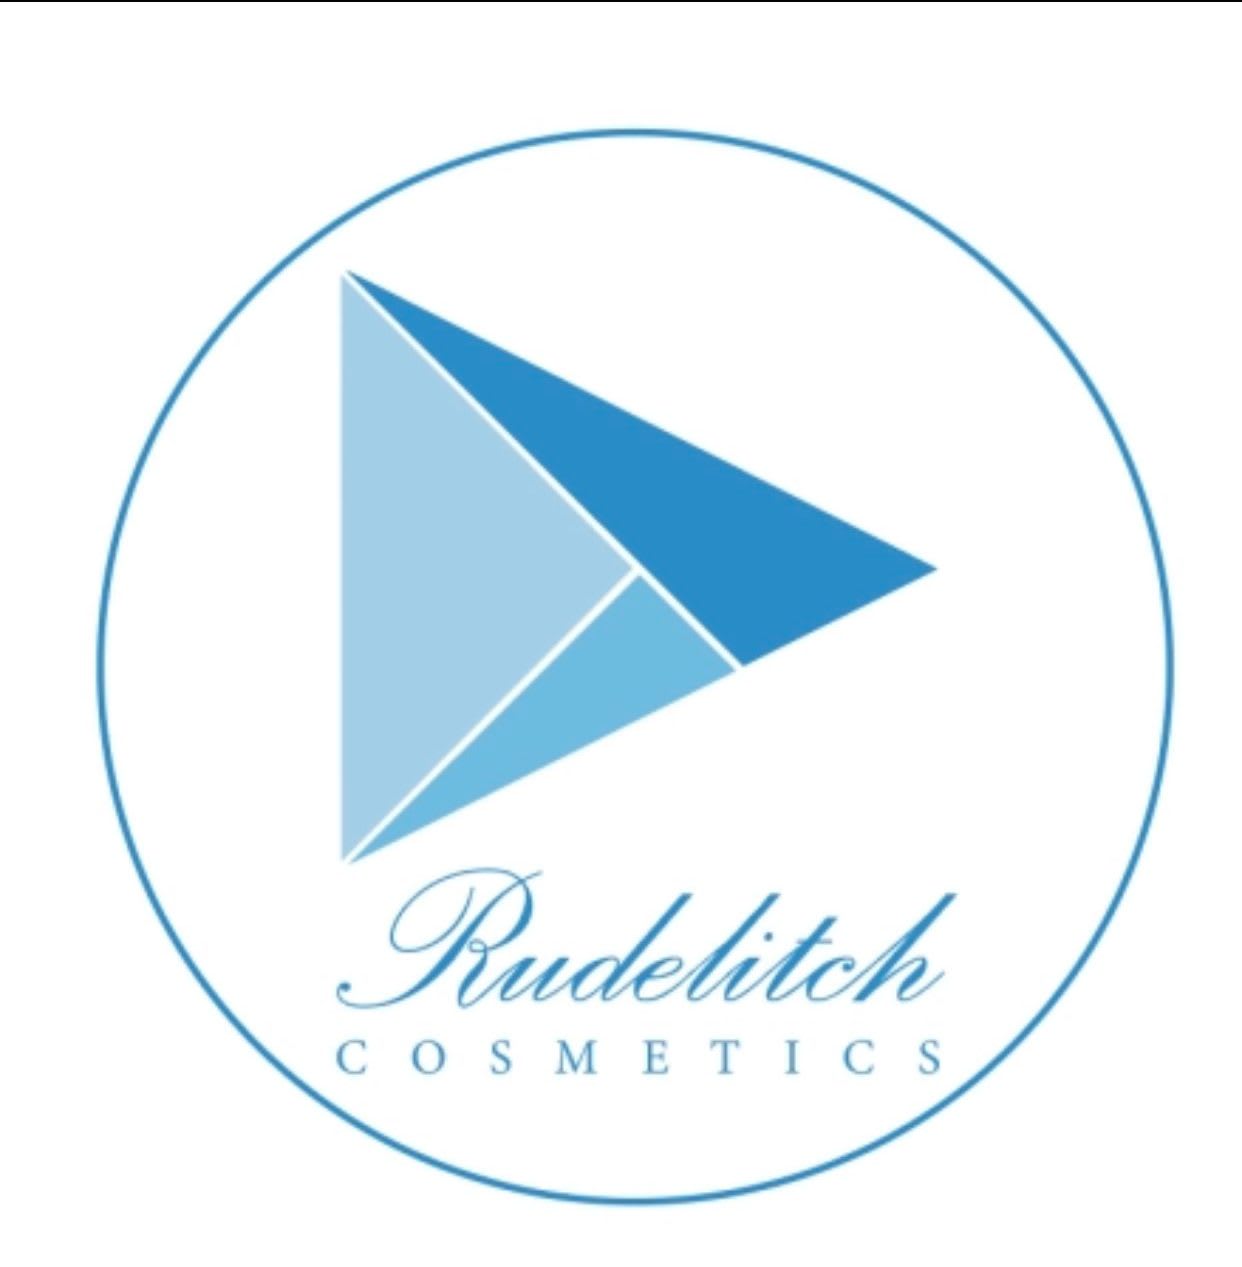 Rudebitch Cosmetics